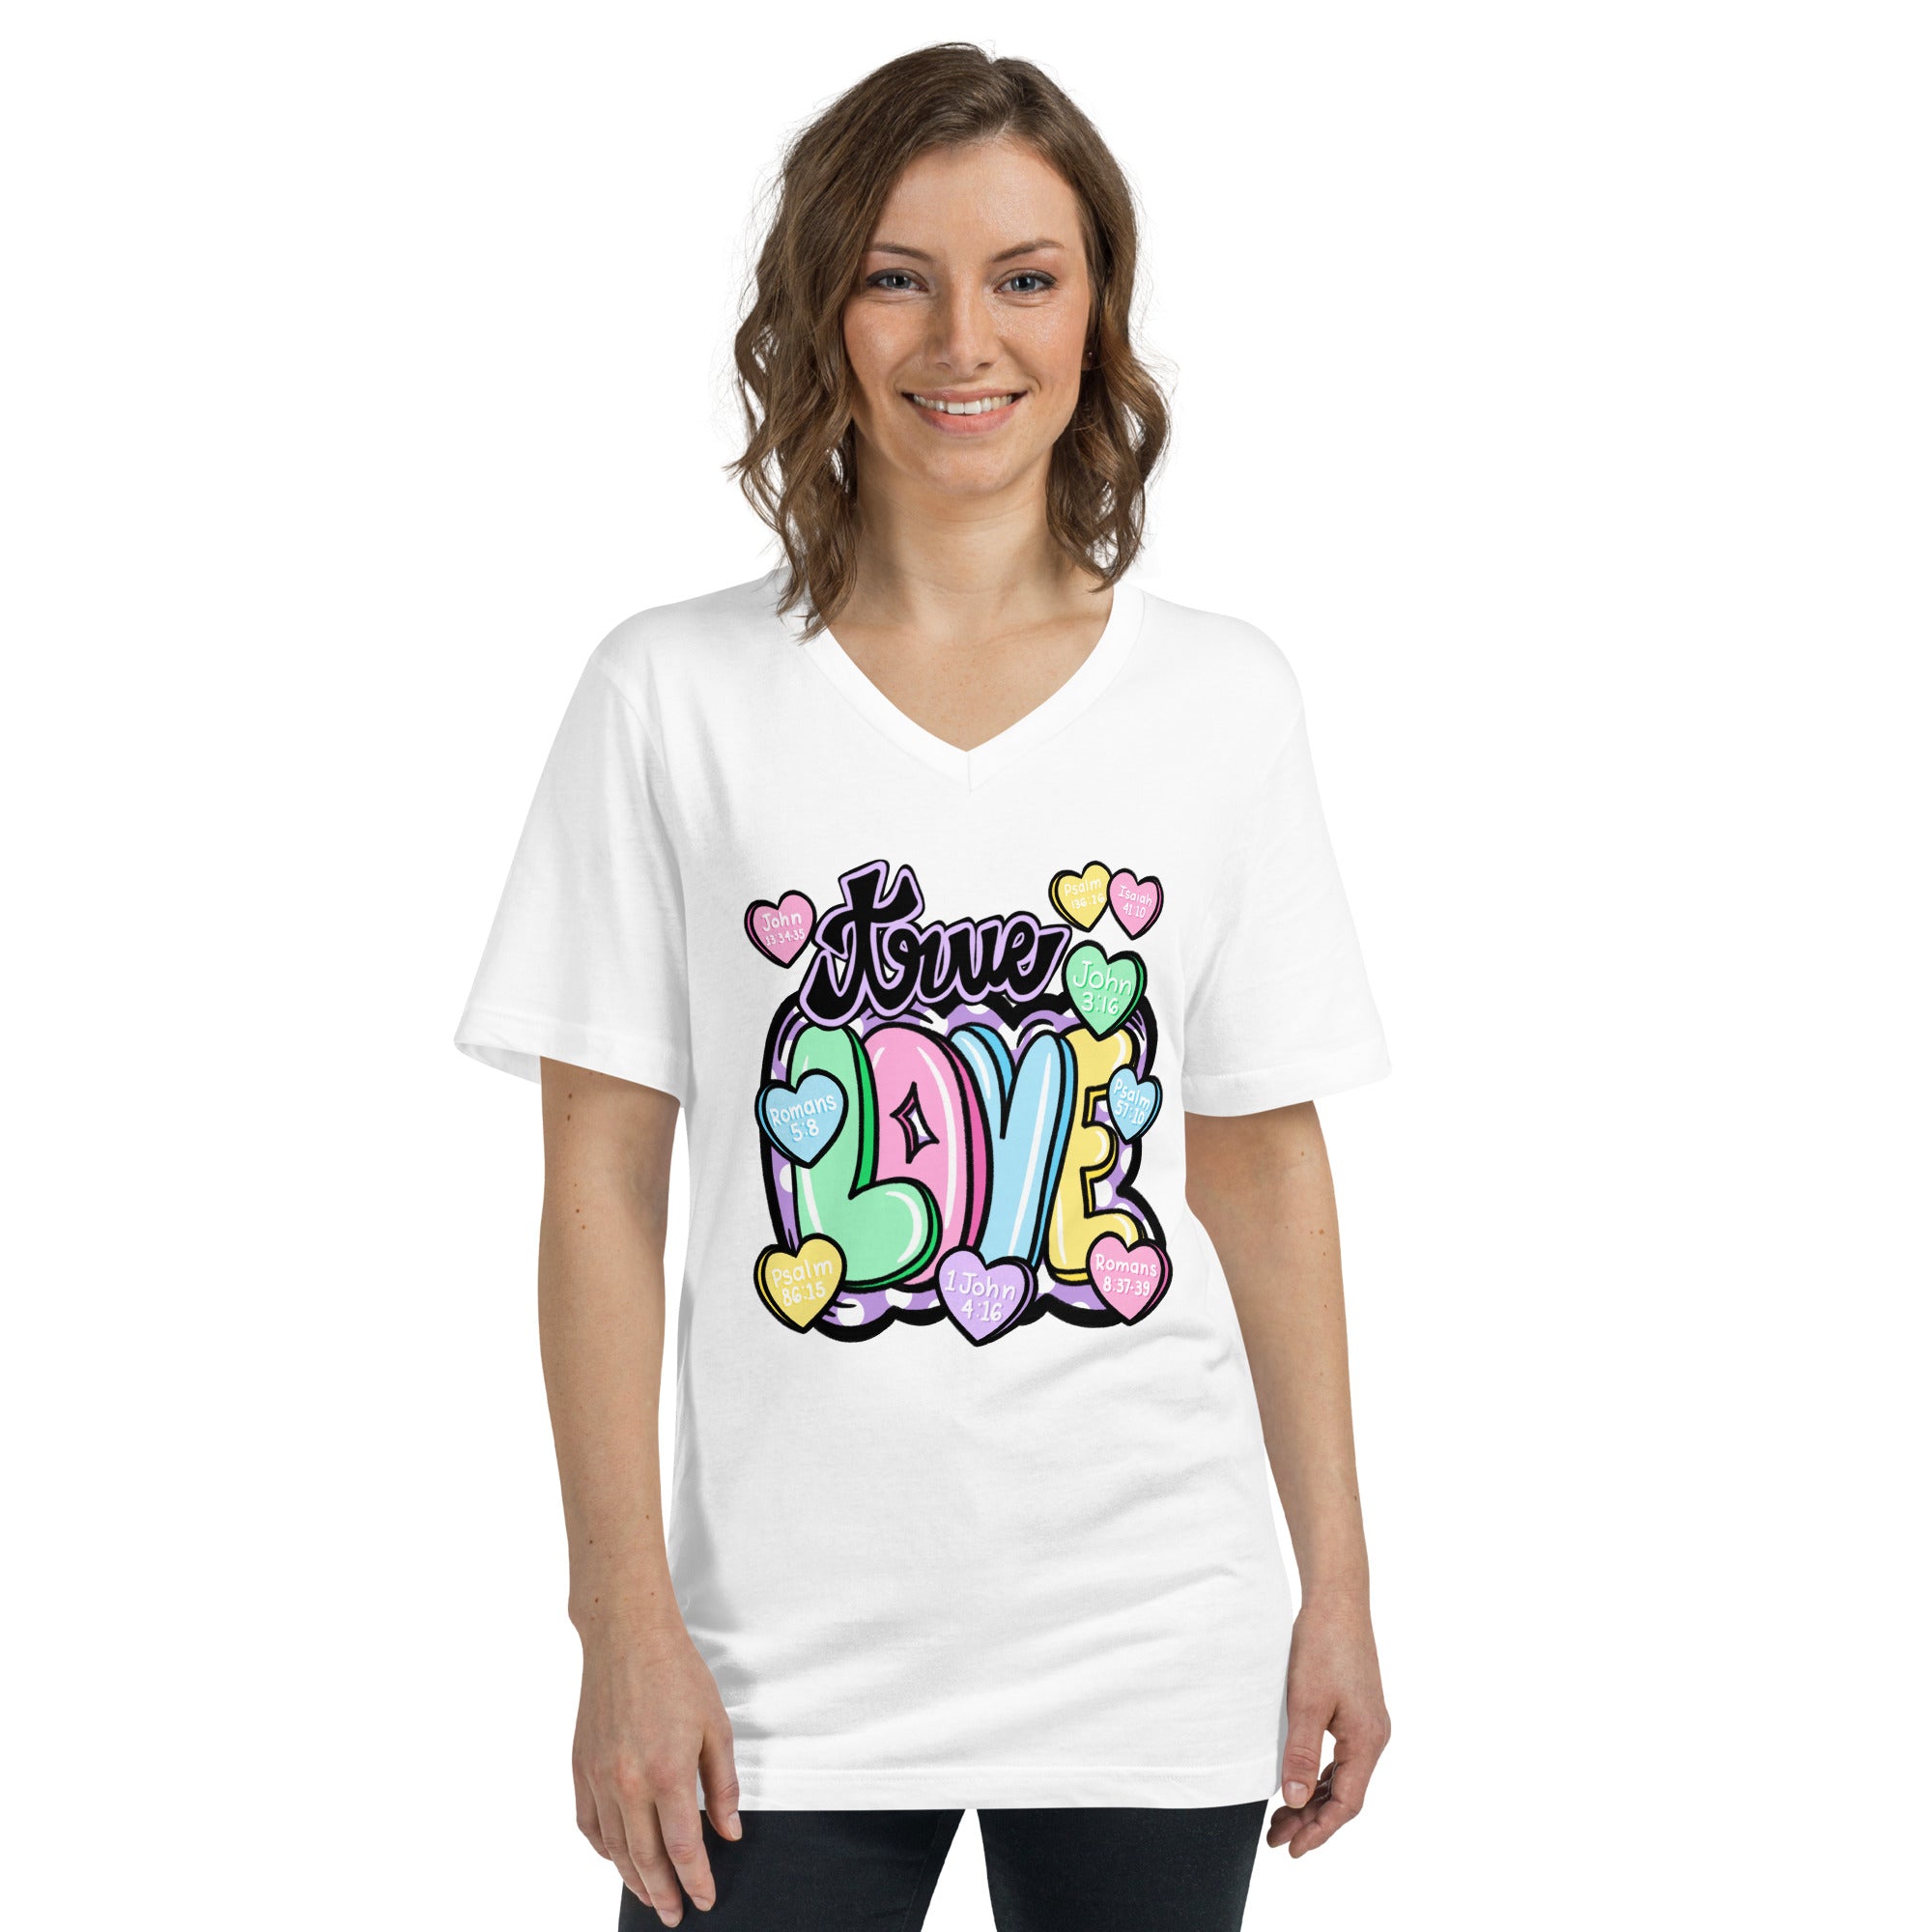 True Love - Scripture Hearts - Women's V-Neck T-Shirt